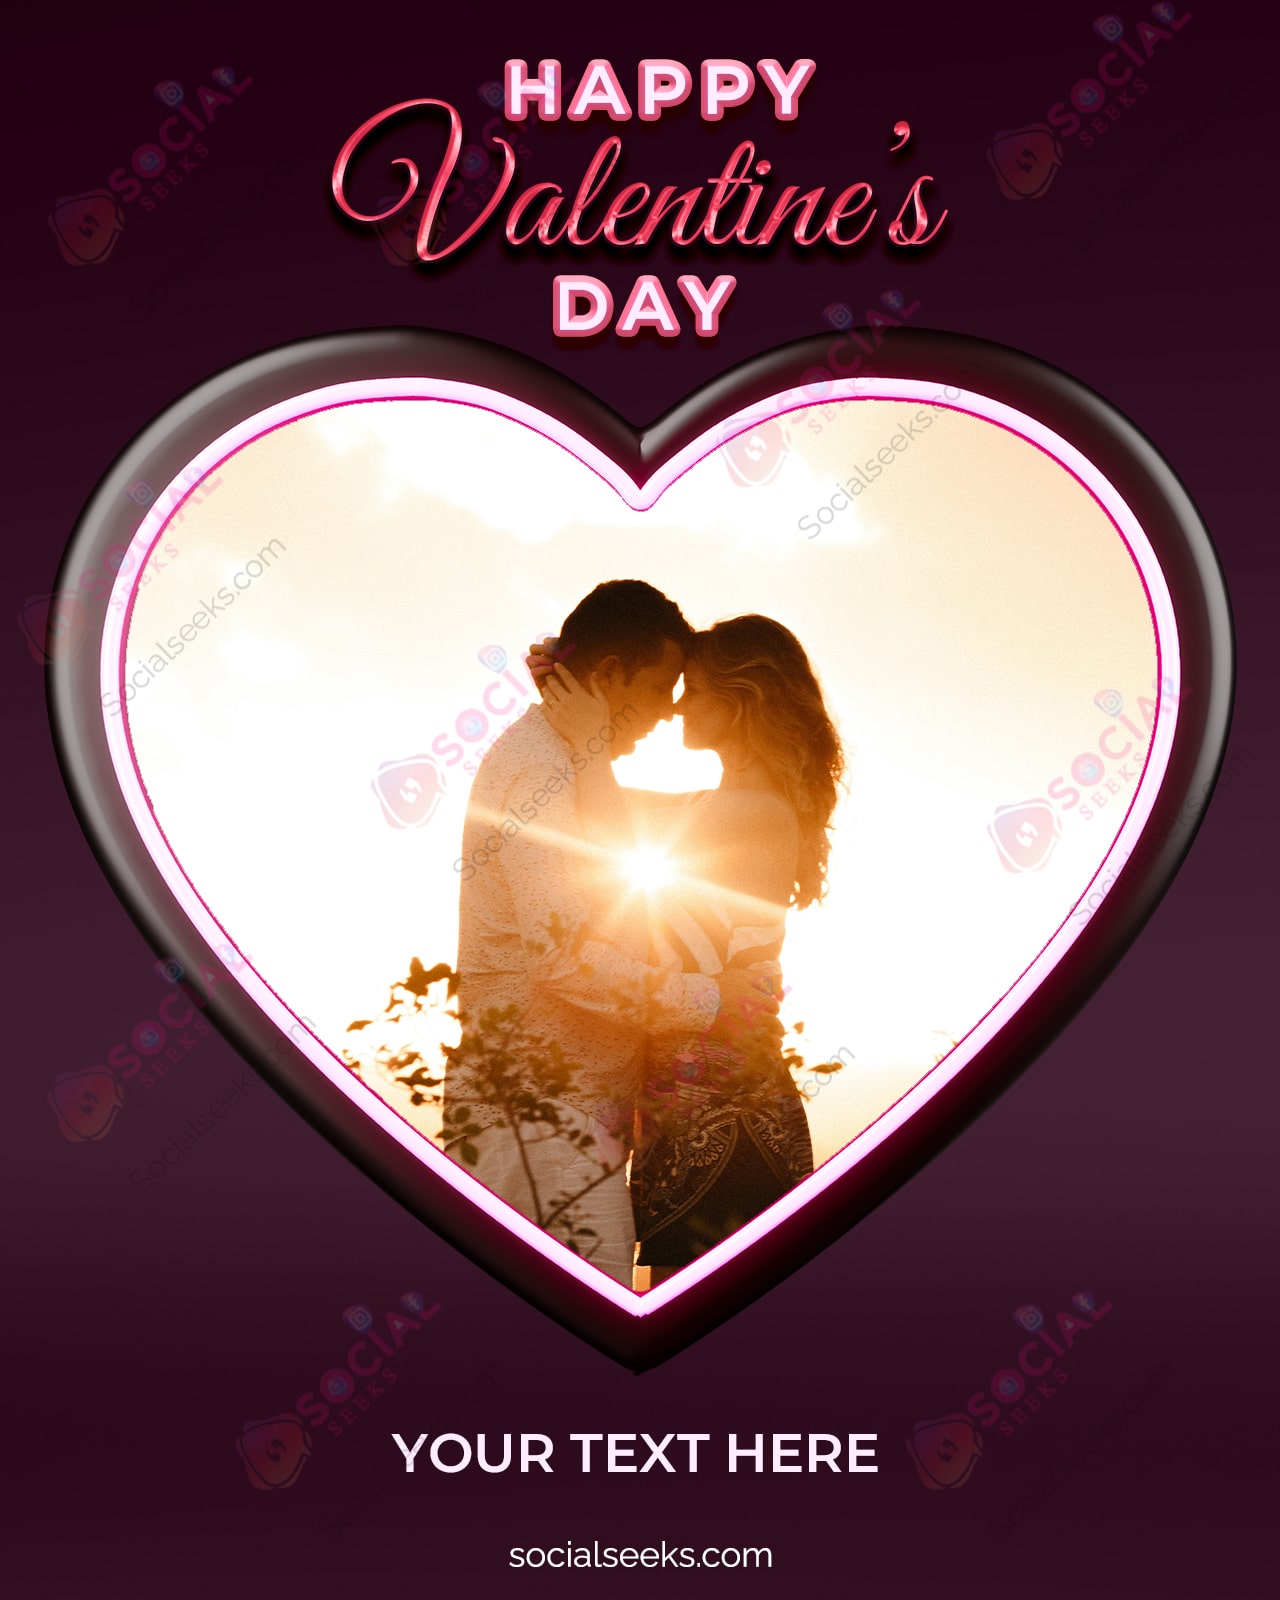 Happy Valentines Day Online Photo Frame Maker Free